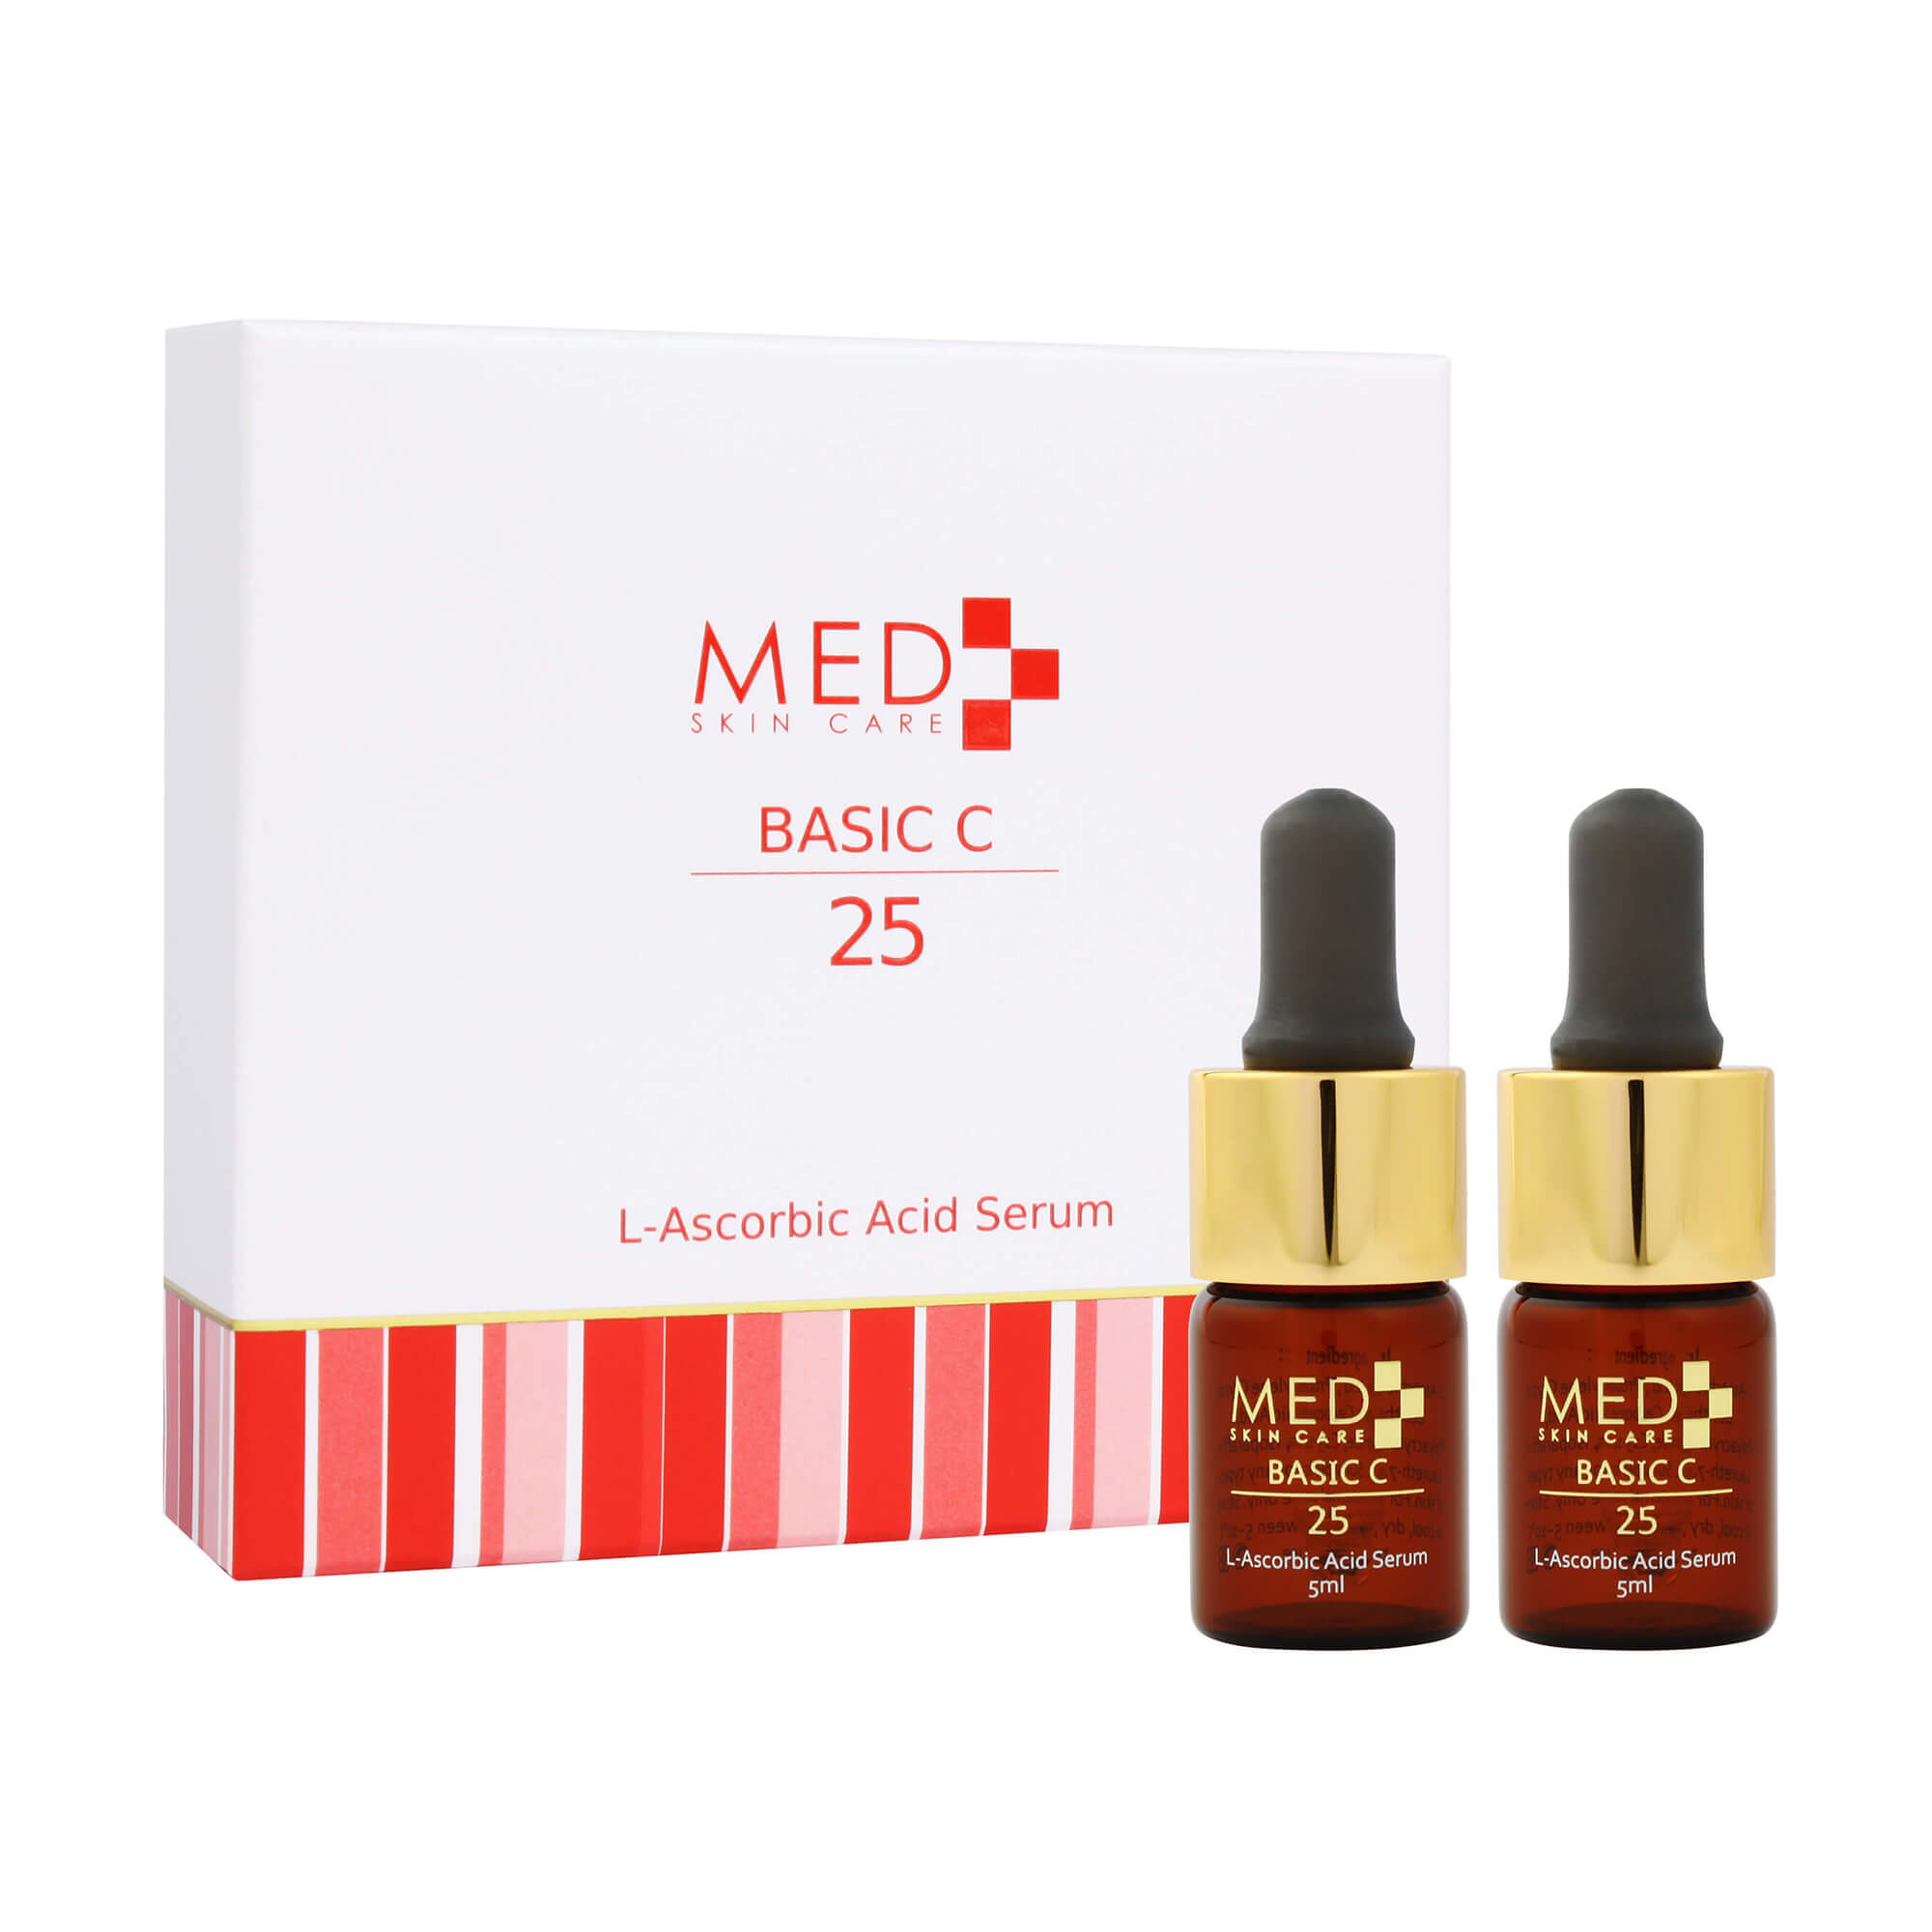 MED Skin Care BASIC C 25 L-Ascorbic Acid Serum 5 ml＊2